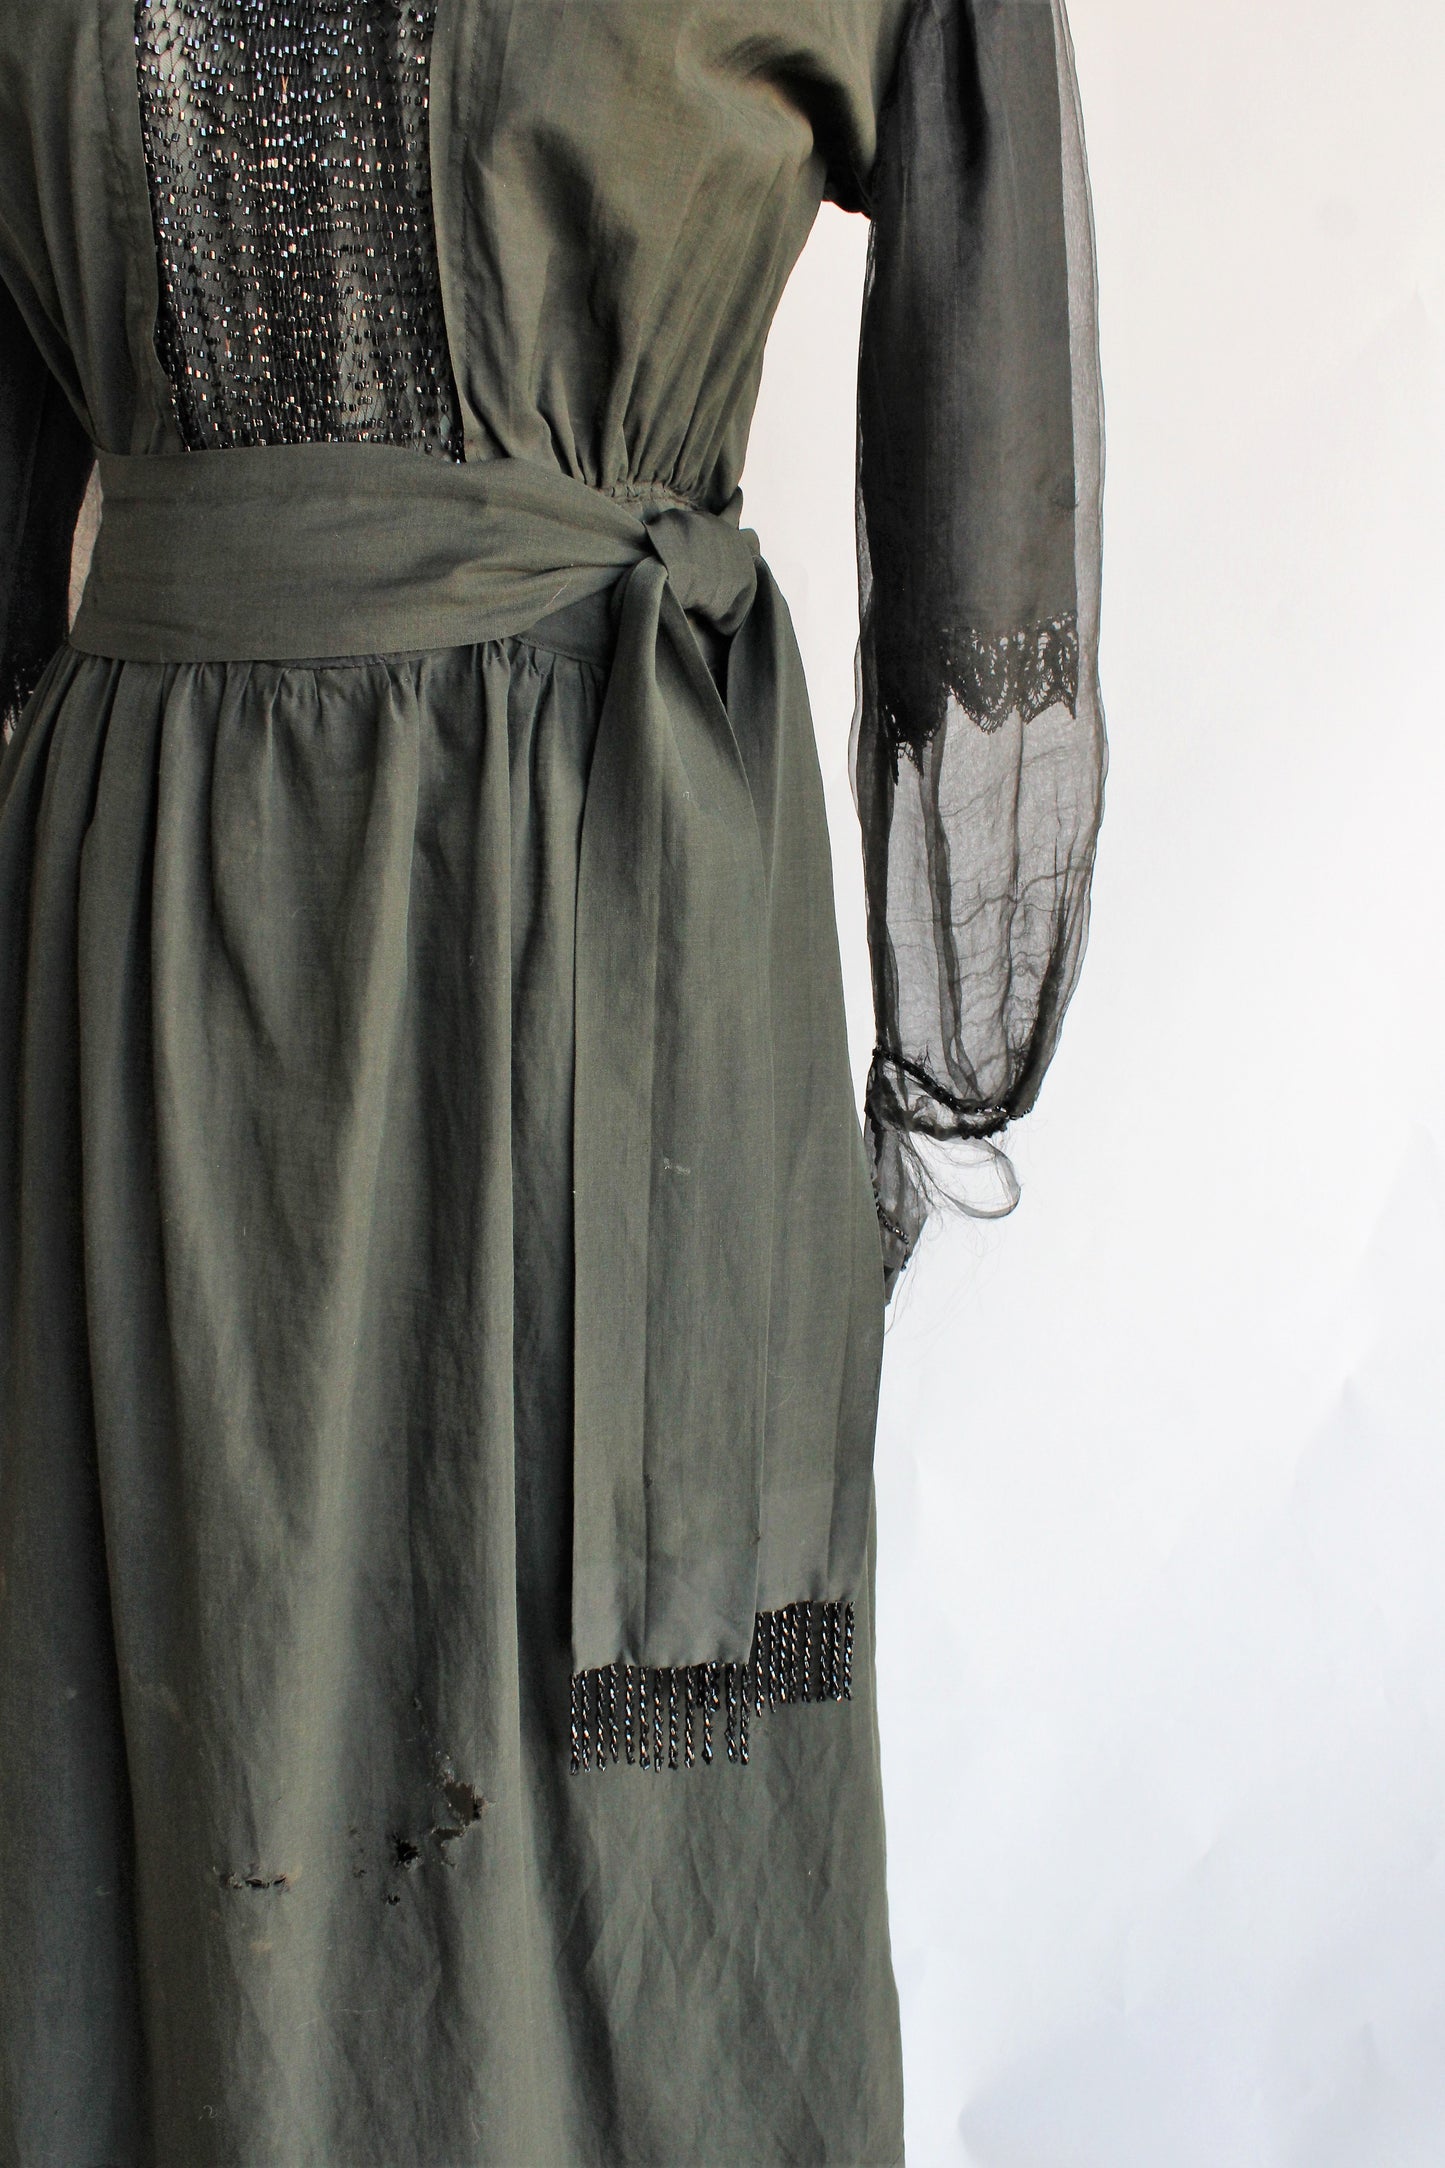 Antique 1910s Black Mourning Dress